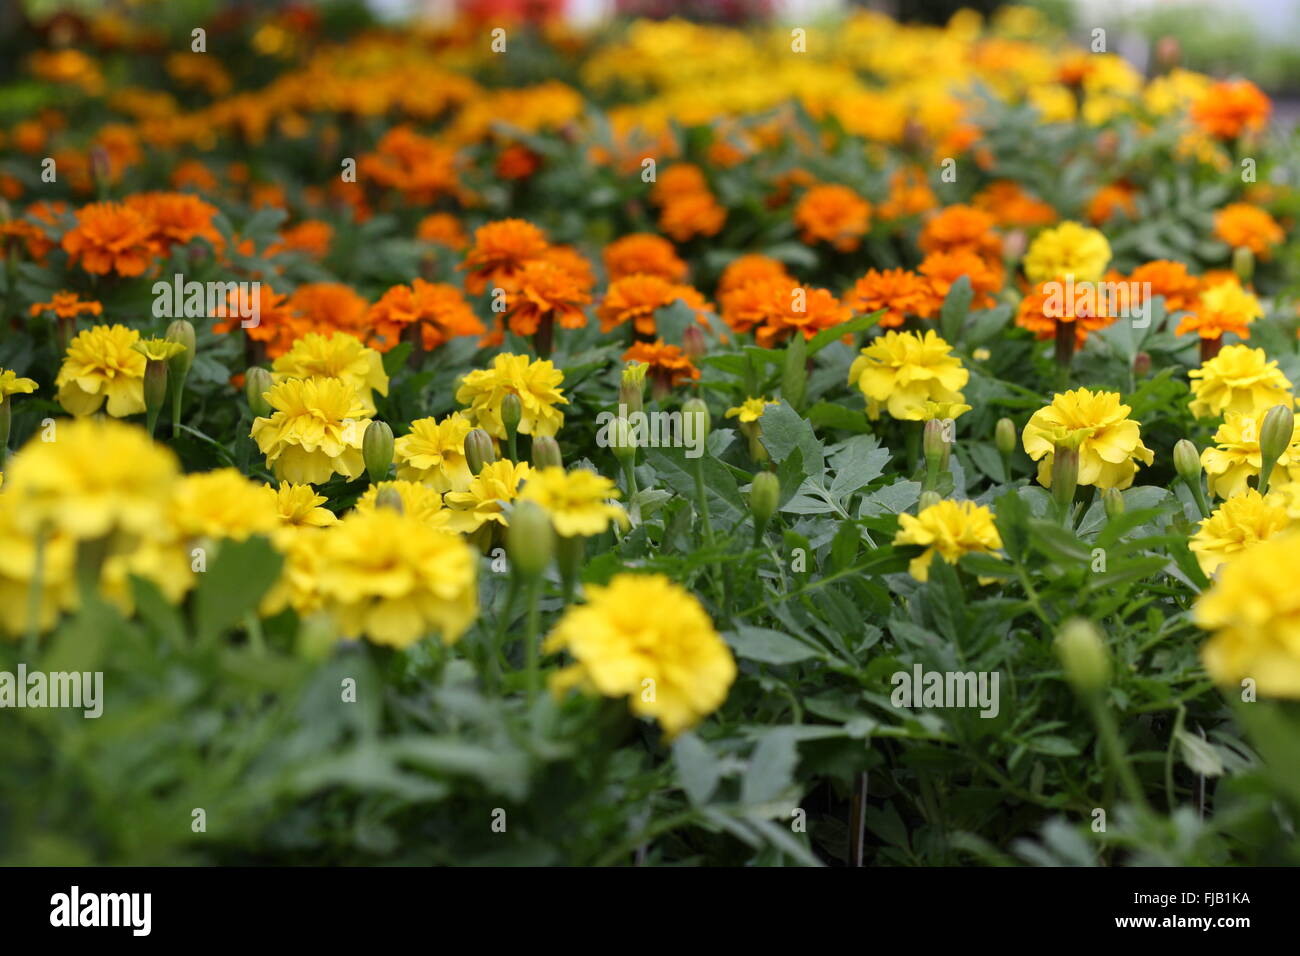 Orange and yellow marigolds amidst their greenery. Stock Photo